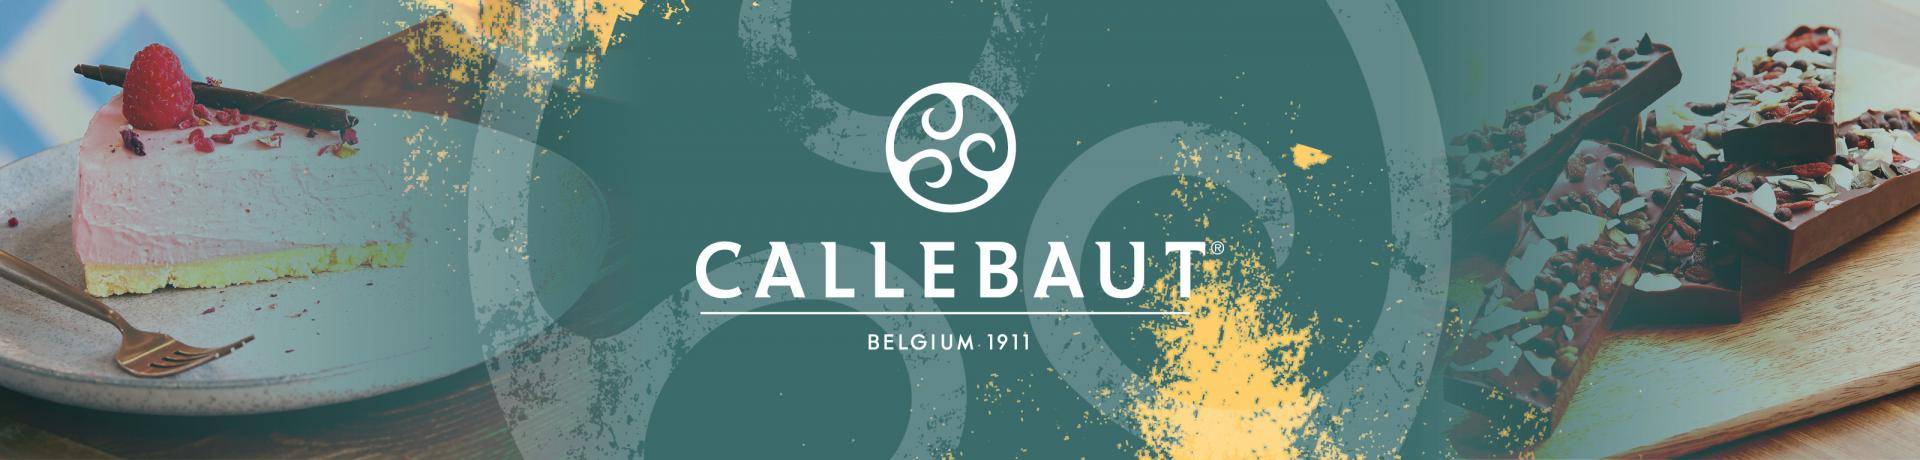 Lasting impressions with Callebaut